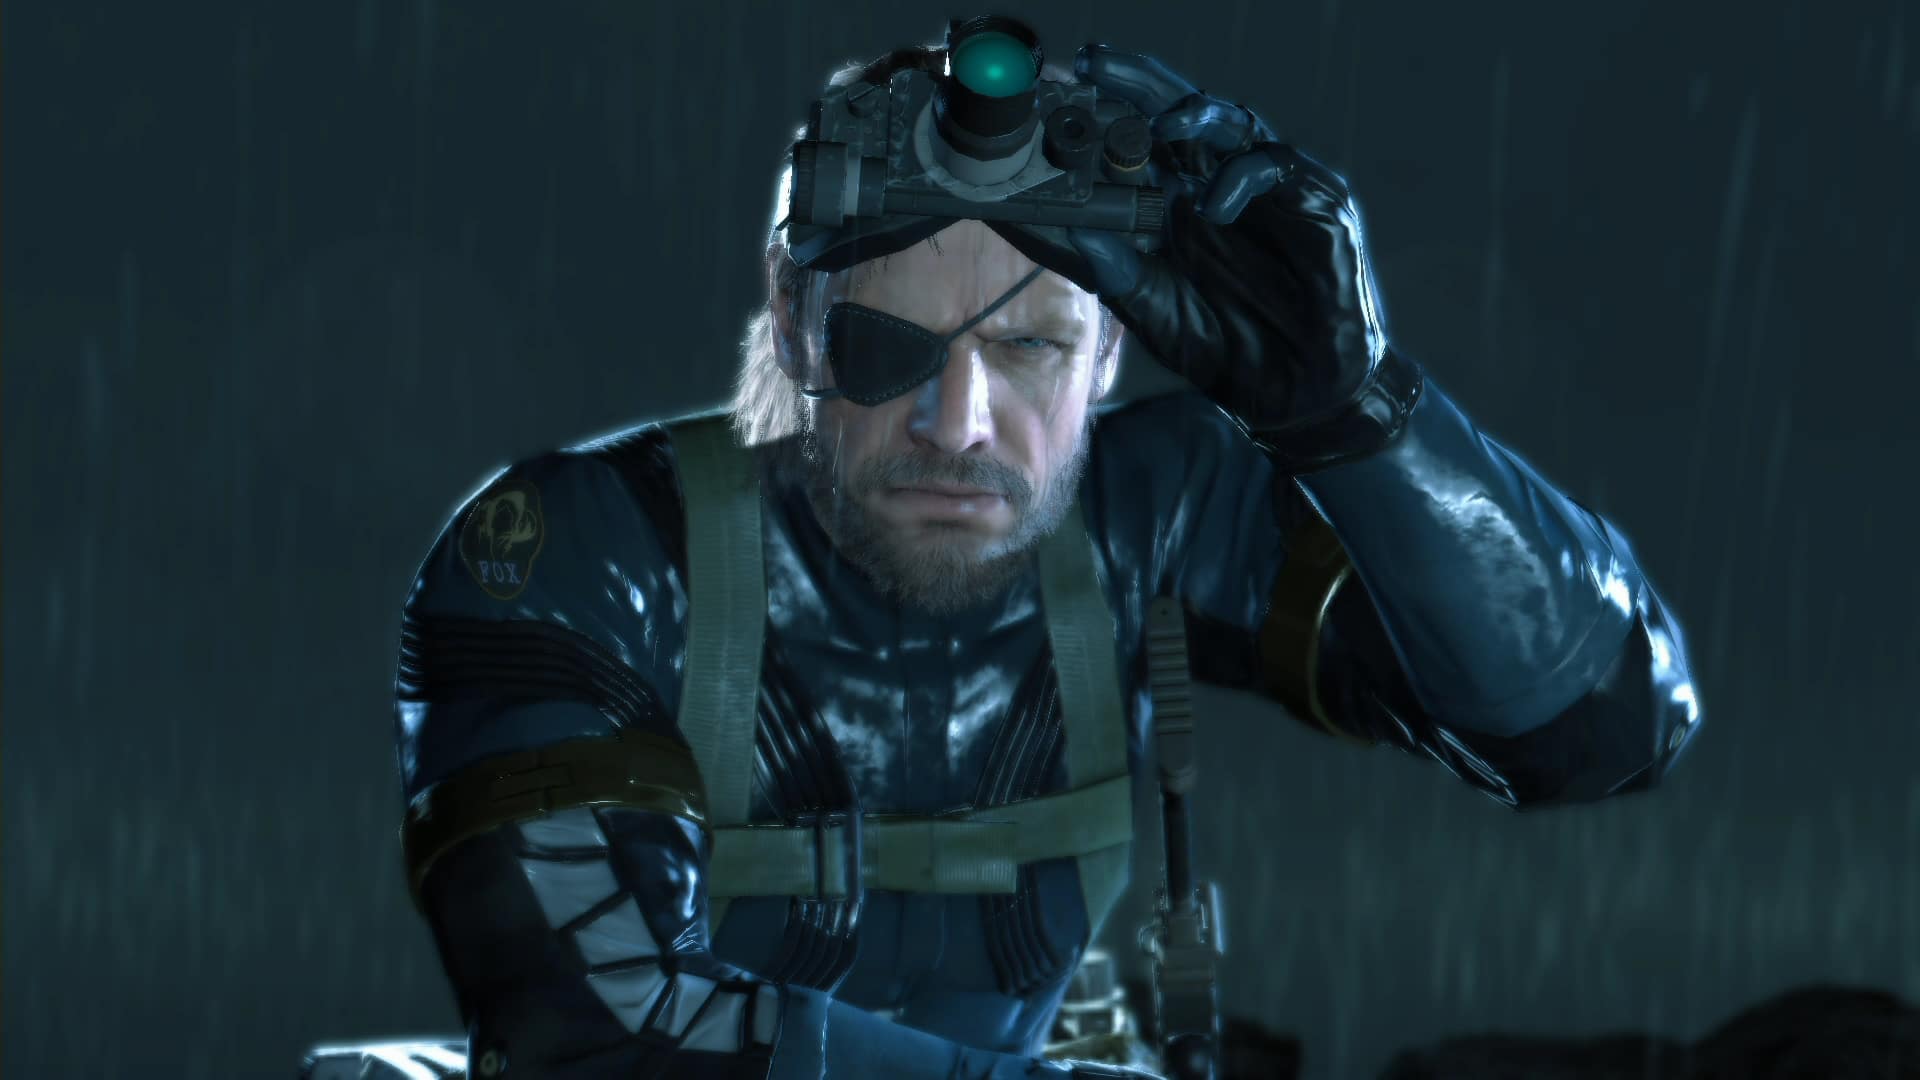 Metal Gear Solid 5: The Phantom Pain Unlockable Costumes